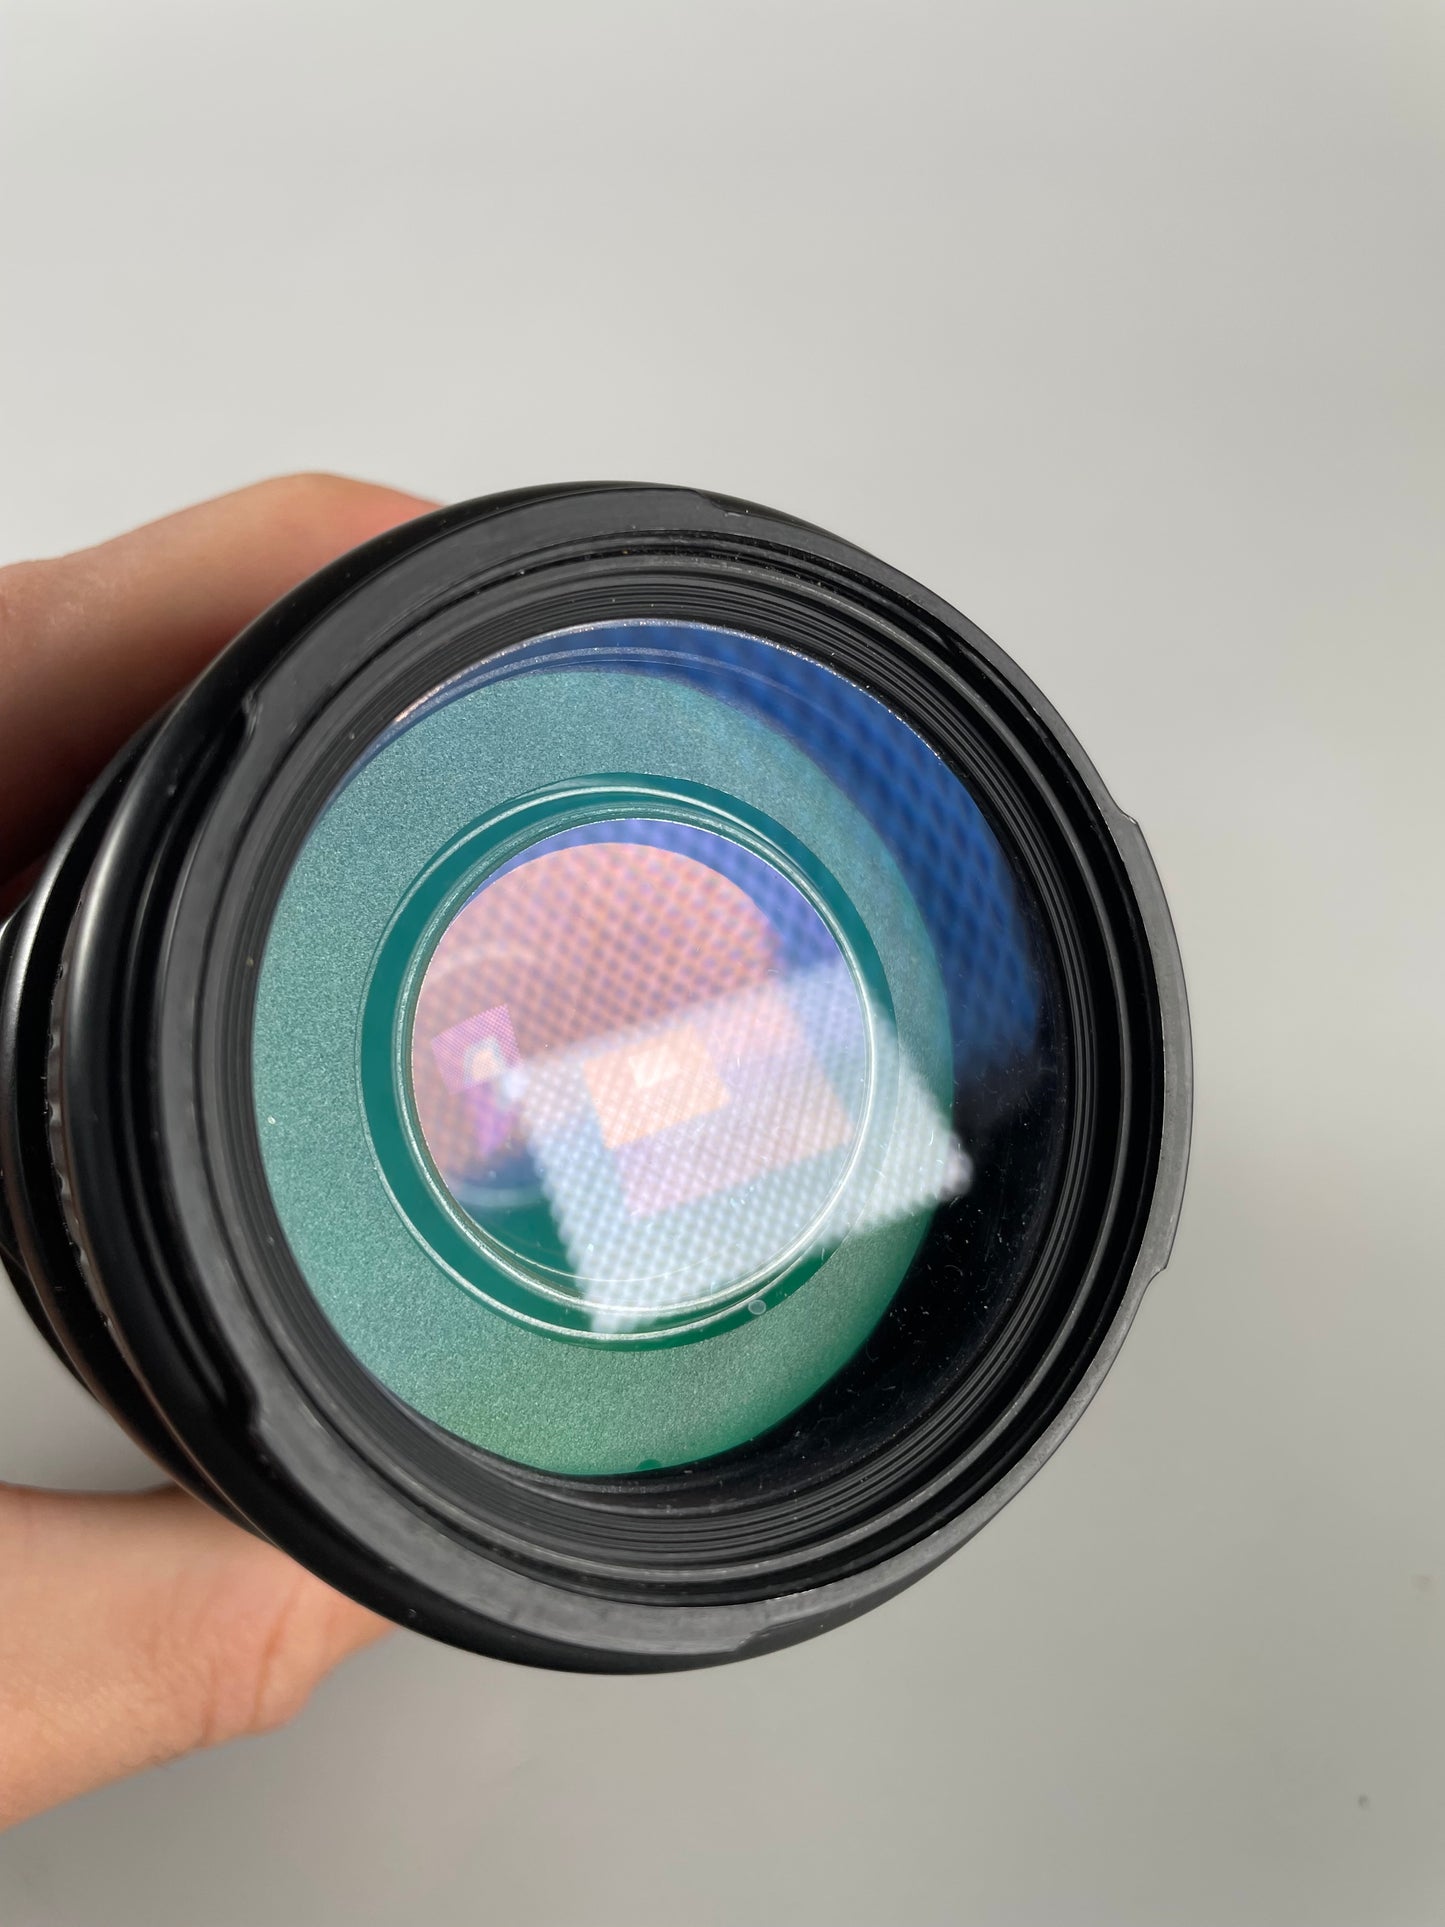 Sigma AF 70-300mm F4-5.6 D APO Macro Lens Nikon